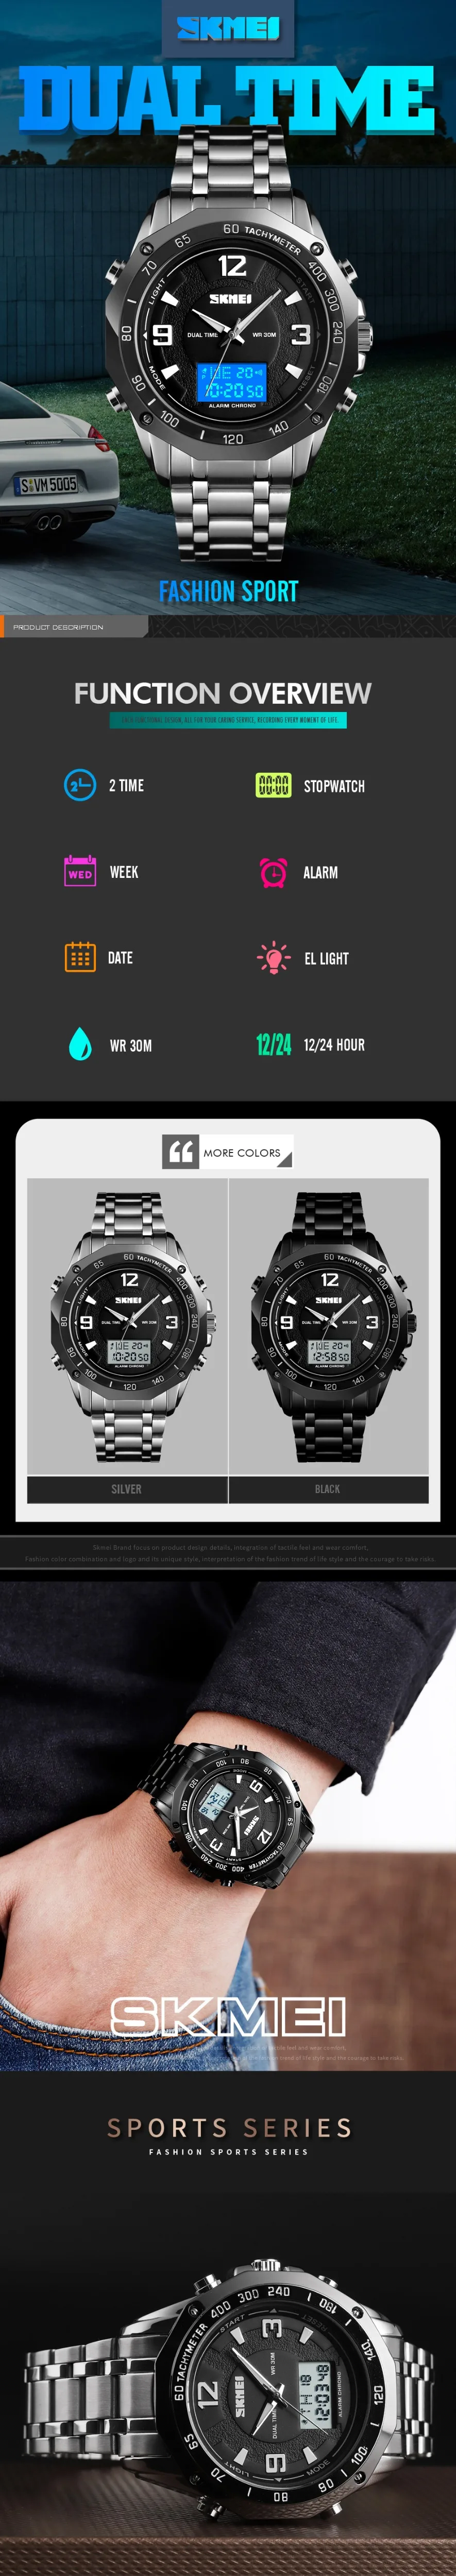 SKMEI мужские s часы лучший бренд класса люкс часы с двумя дисплеями Мужские кварцевые часы водонепроницаемые мужские наручные часы Relogio Masculino